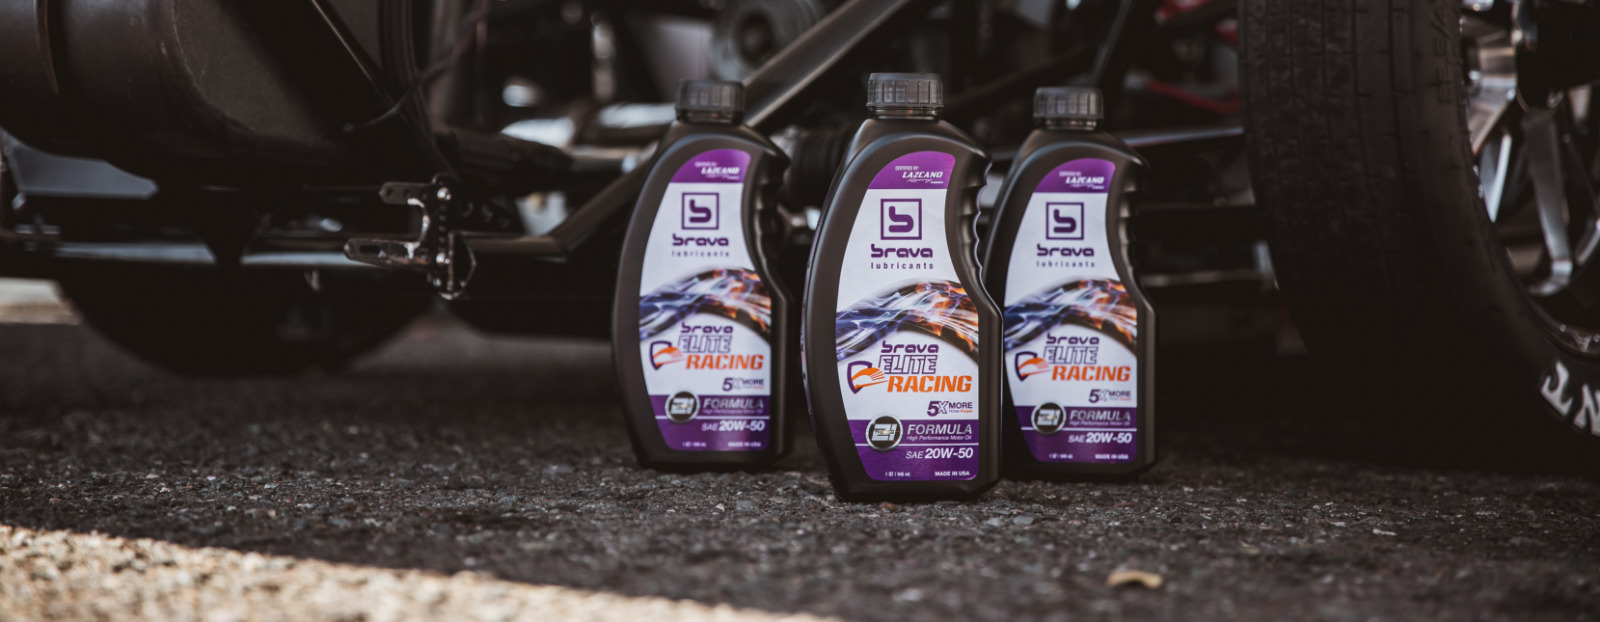 elite racing oil product bottles